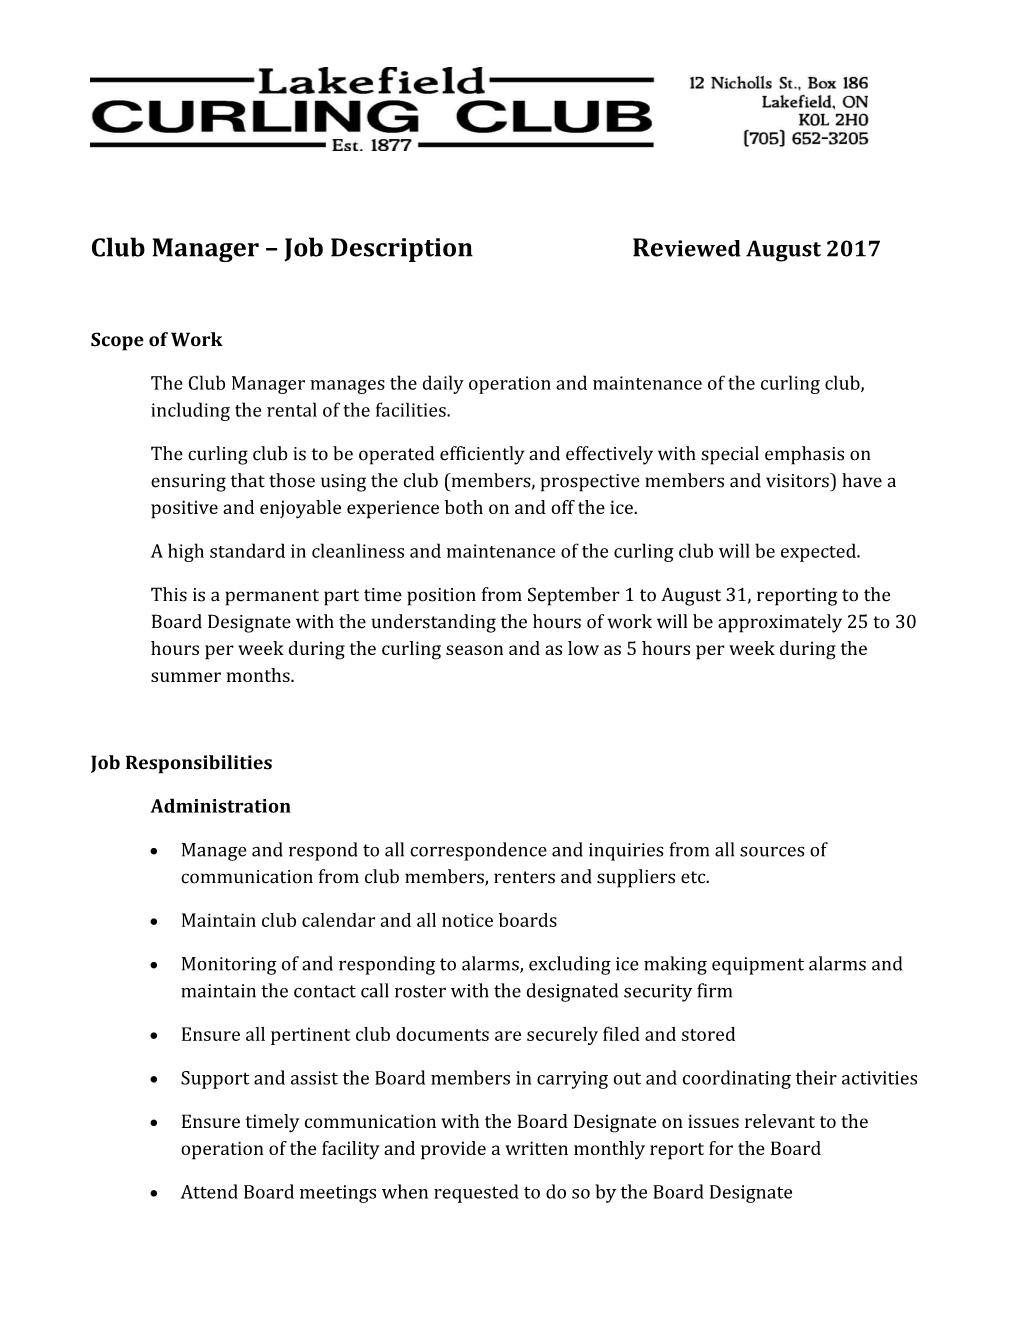 Club Manager Job Description Reviewed August 2017